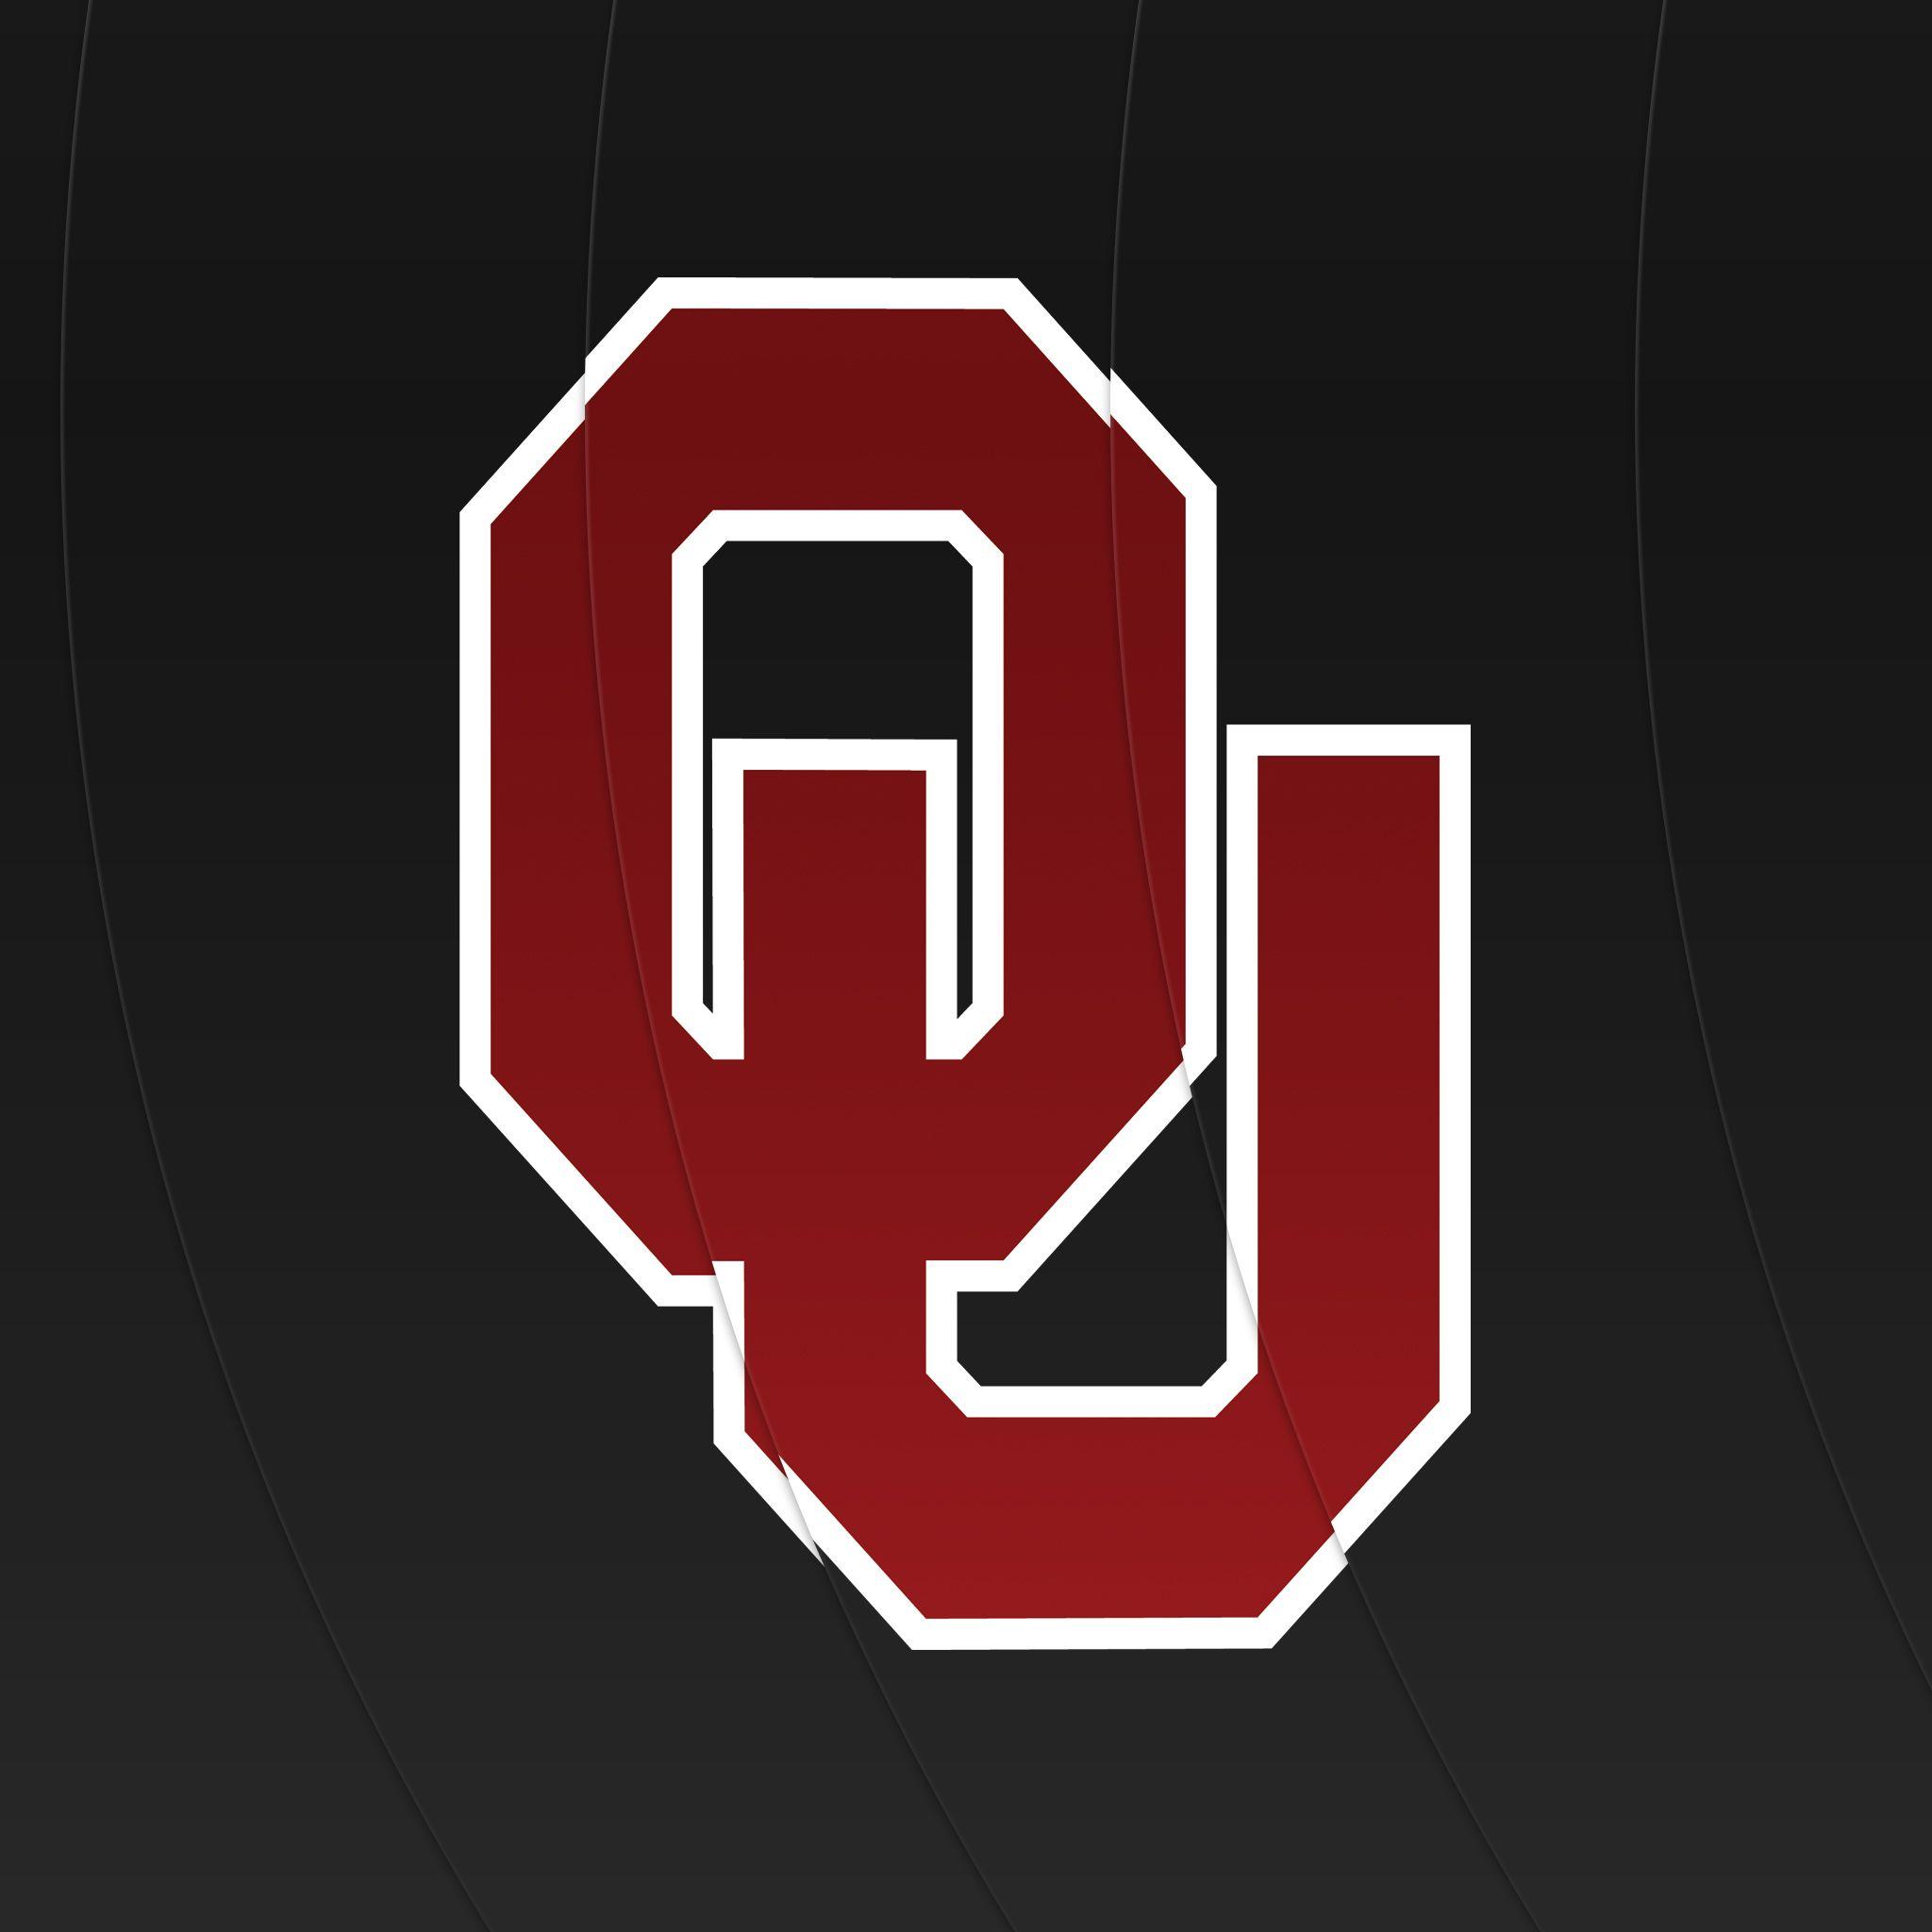 Sooners Logo - Best Photo of Oklahoma University Logo of Oklahoma